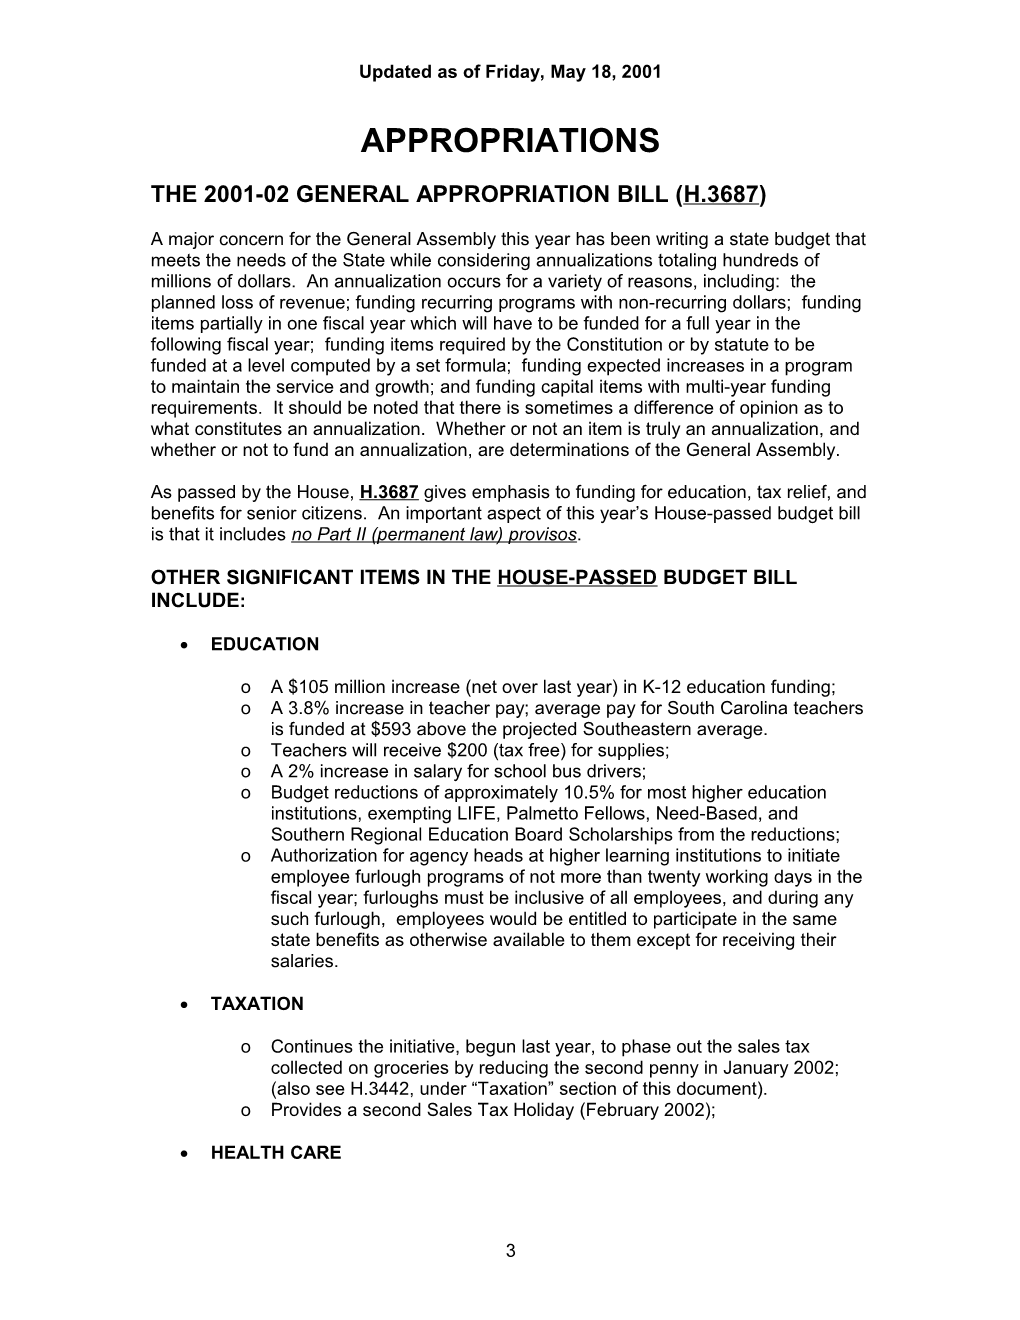 Legislative Update - Vol. 18 No. 20 May 22, 2001 - South Carolina Legislature Online